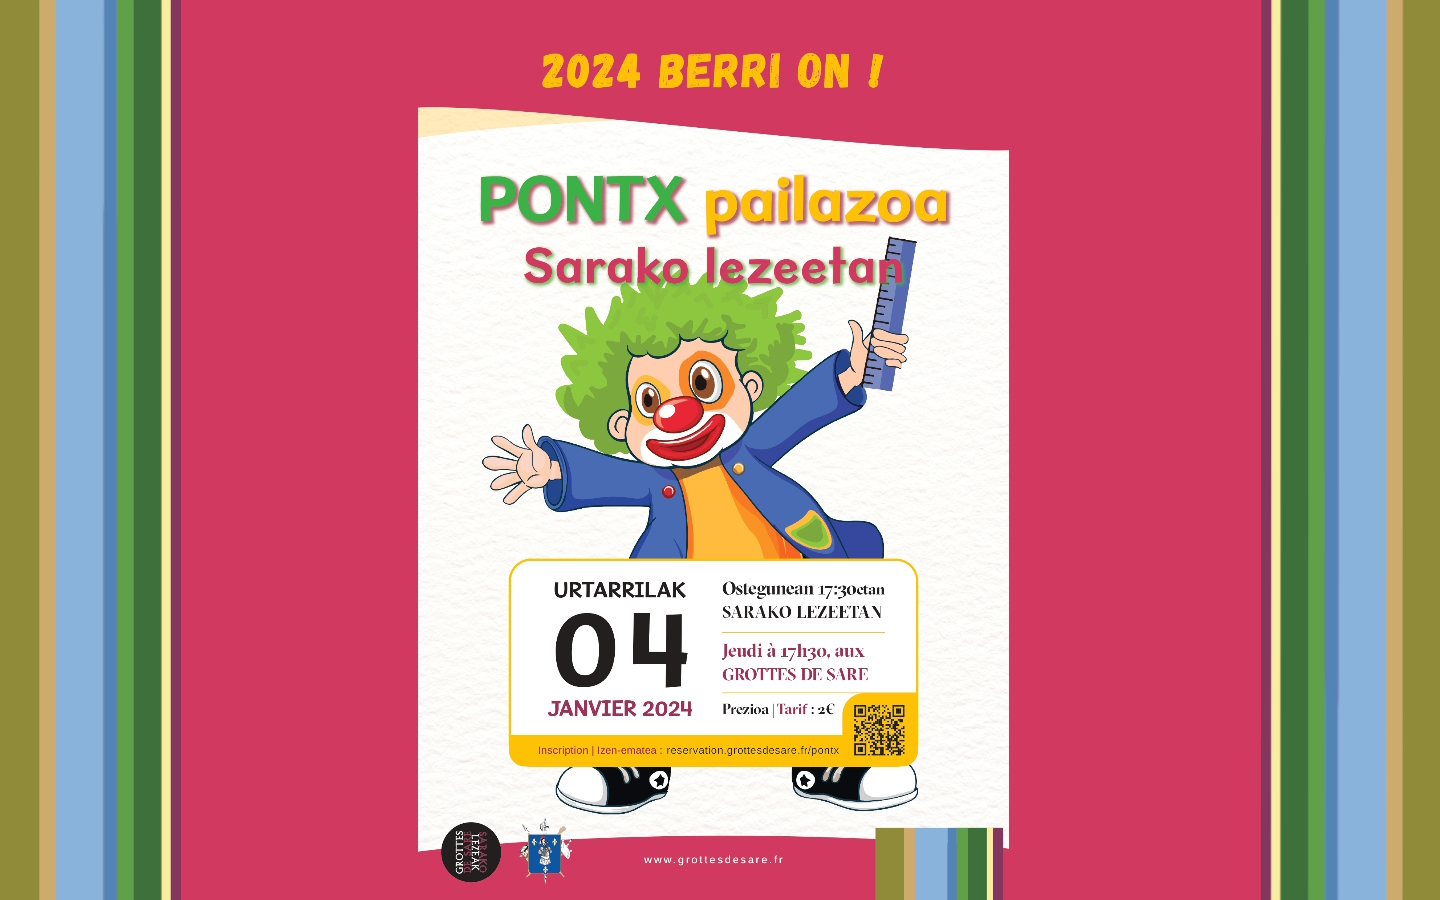 Spectacle exclusif du clown Pontx: "2024 berri on"